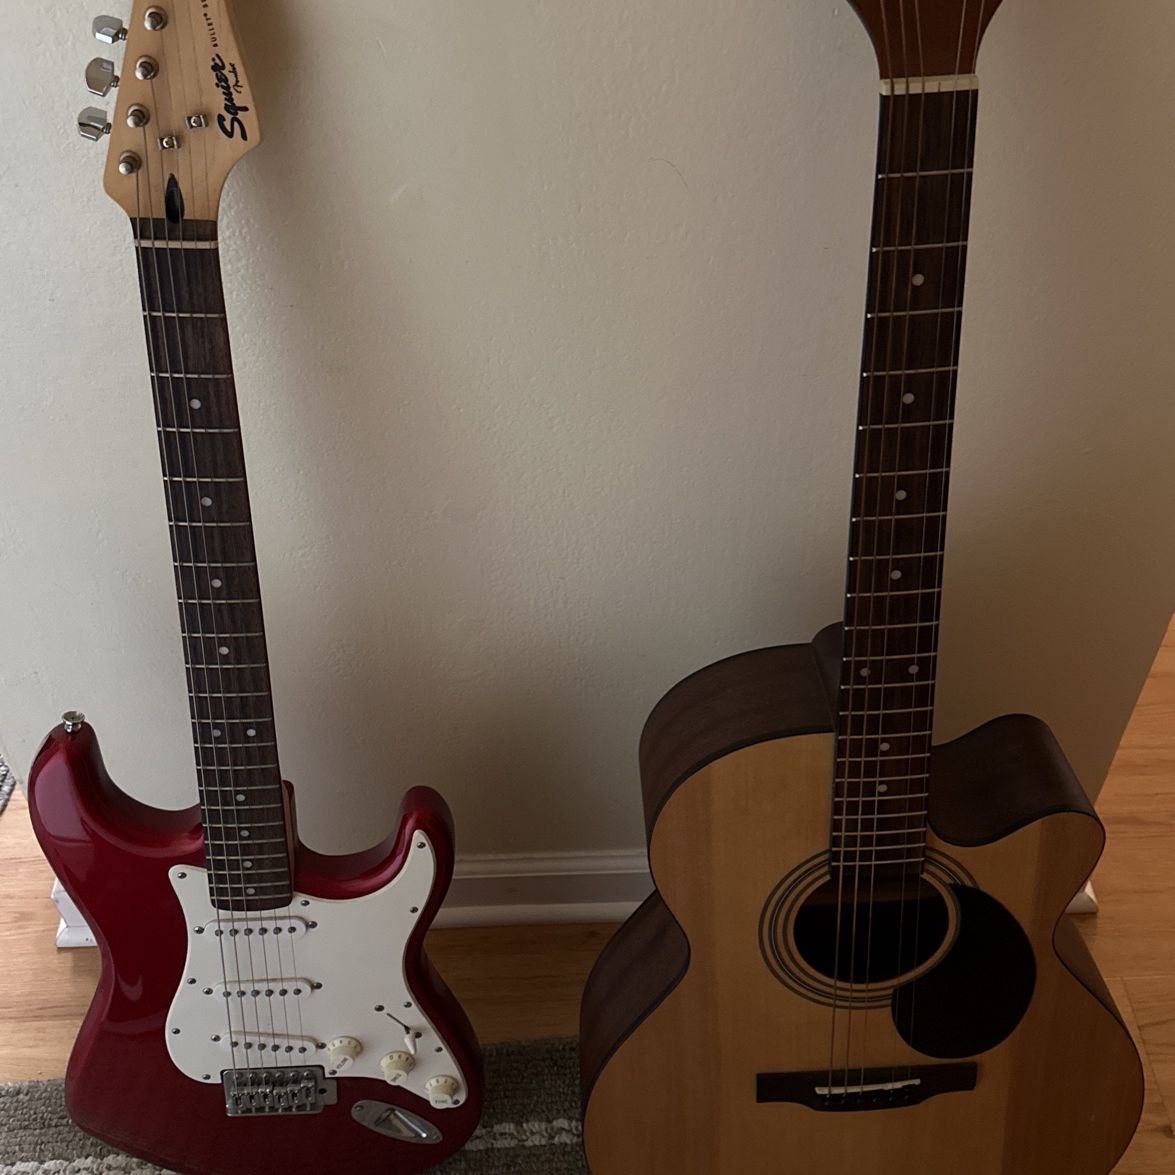 Fender Strat Electric Guitar / Jasmine Acoustic Guitar/ Fender Mustang I Amp